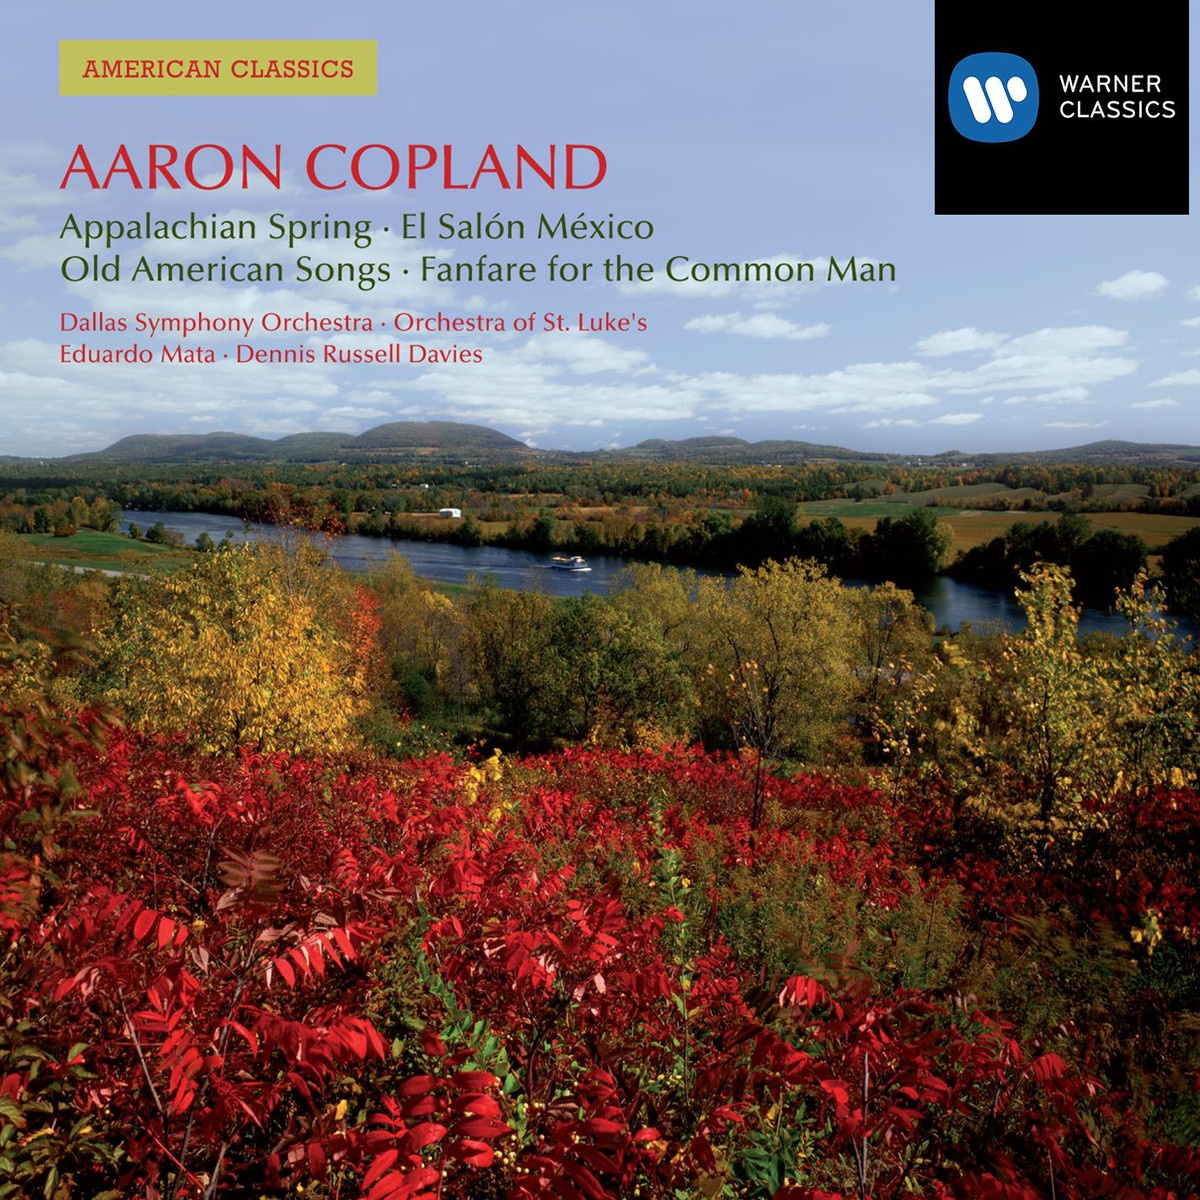 Appalachian Spring (1999 Digital Remaster): Allegro: Solo Dance Of The Bartered Bride